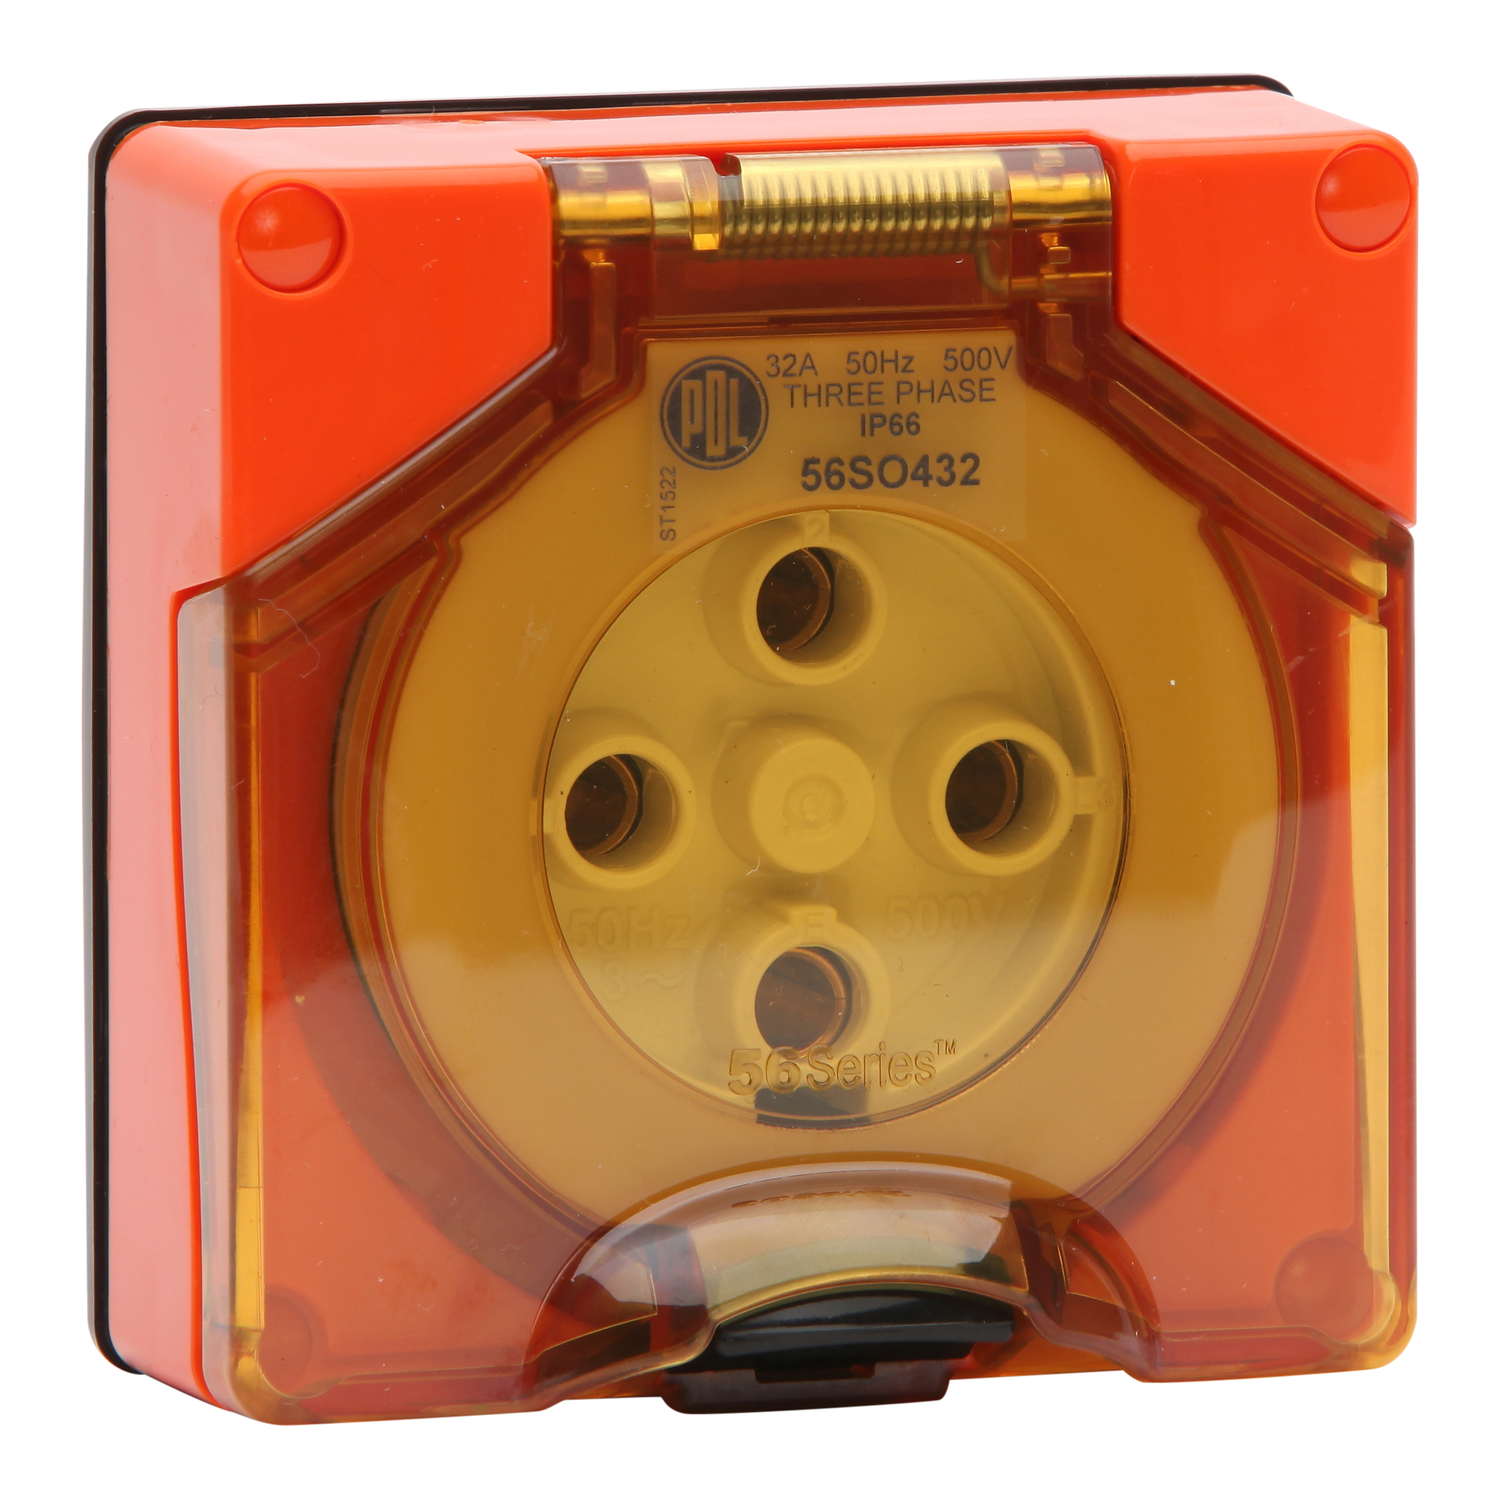 PDL 56 Series - Socket 32A 500V 3-Phase 4-Round Pin IP66 - Chemical-Resistant Orange